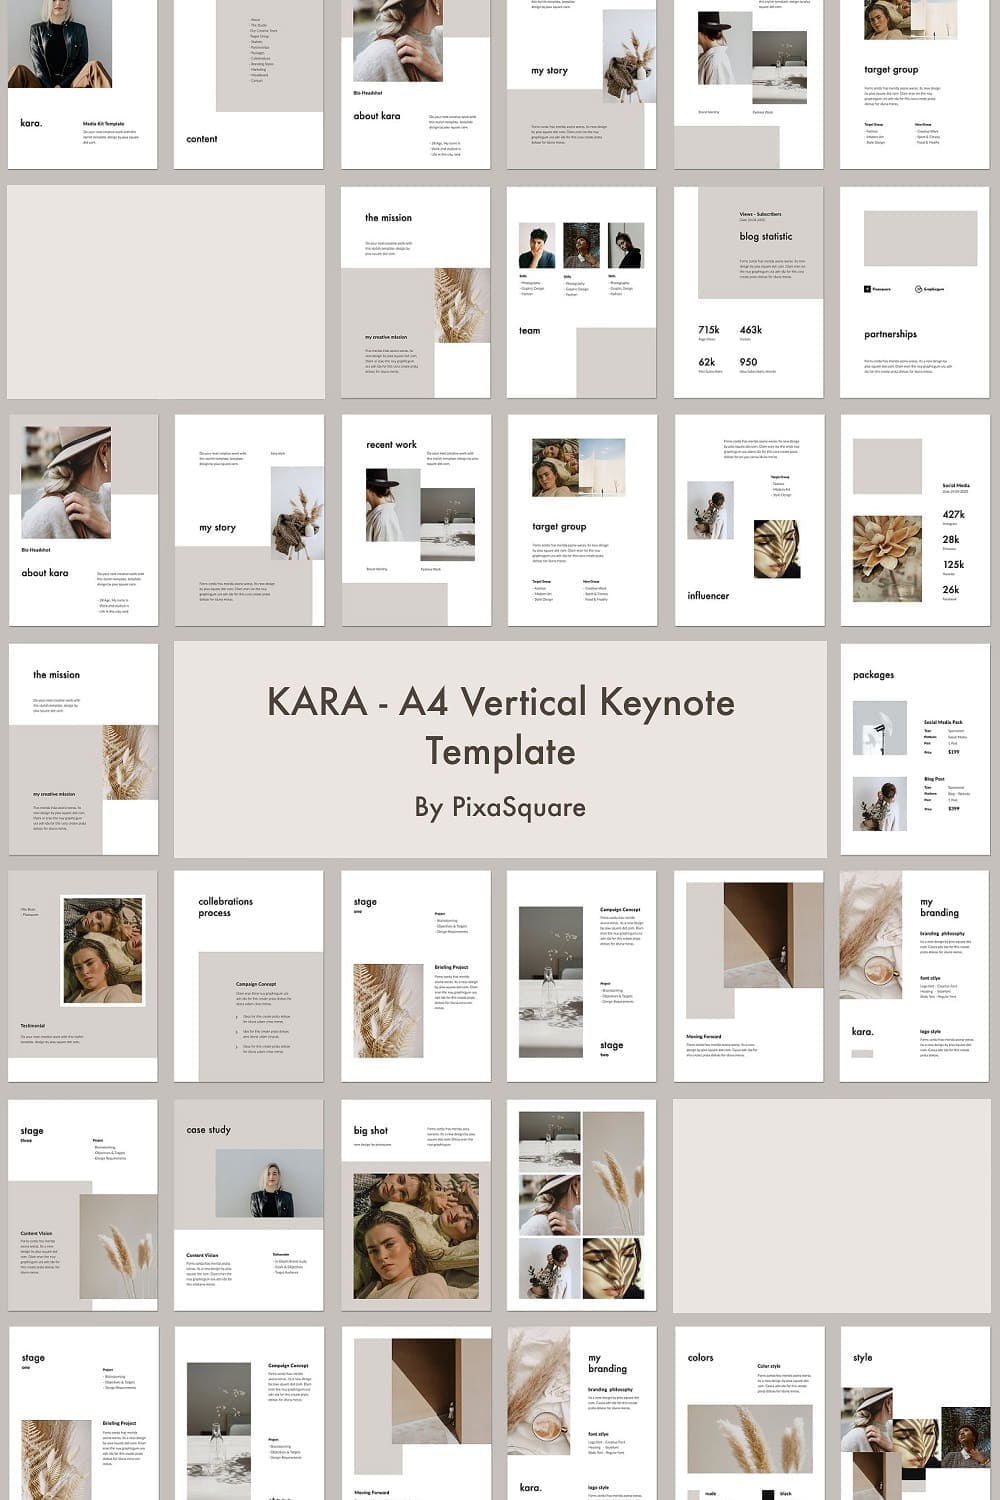 32 slides, Kara A4 vertical keynote template for Pinterest.